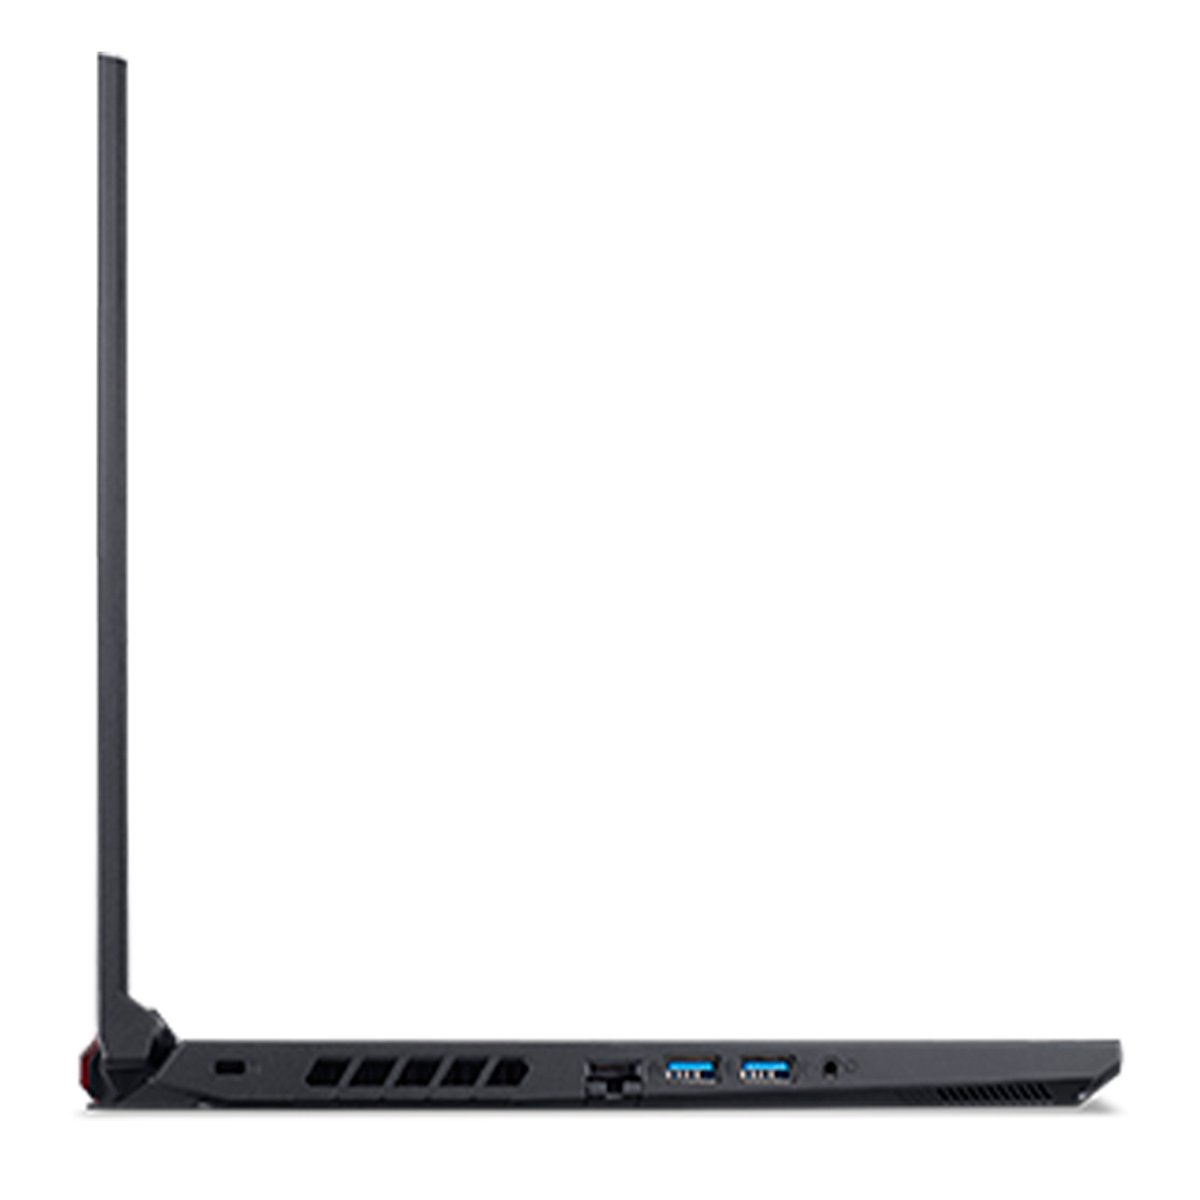 Acer Gaming Laptop Nitro5 AN515-55-73HX,  Intel Core i7-10750H 10th Gen,8GB RAM,1TB SSD,NVIDIA GeForce GTX 1660T GDDR6, Windows 10,Black